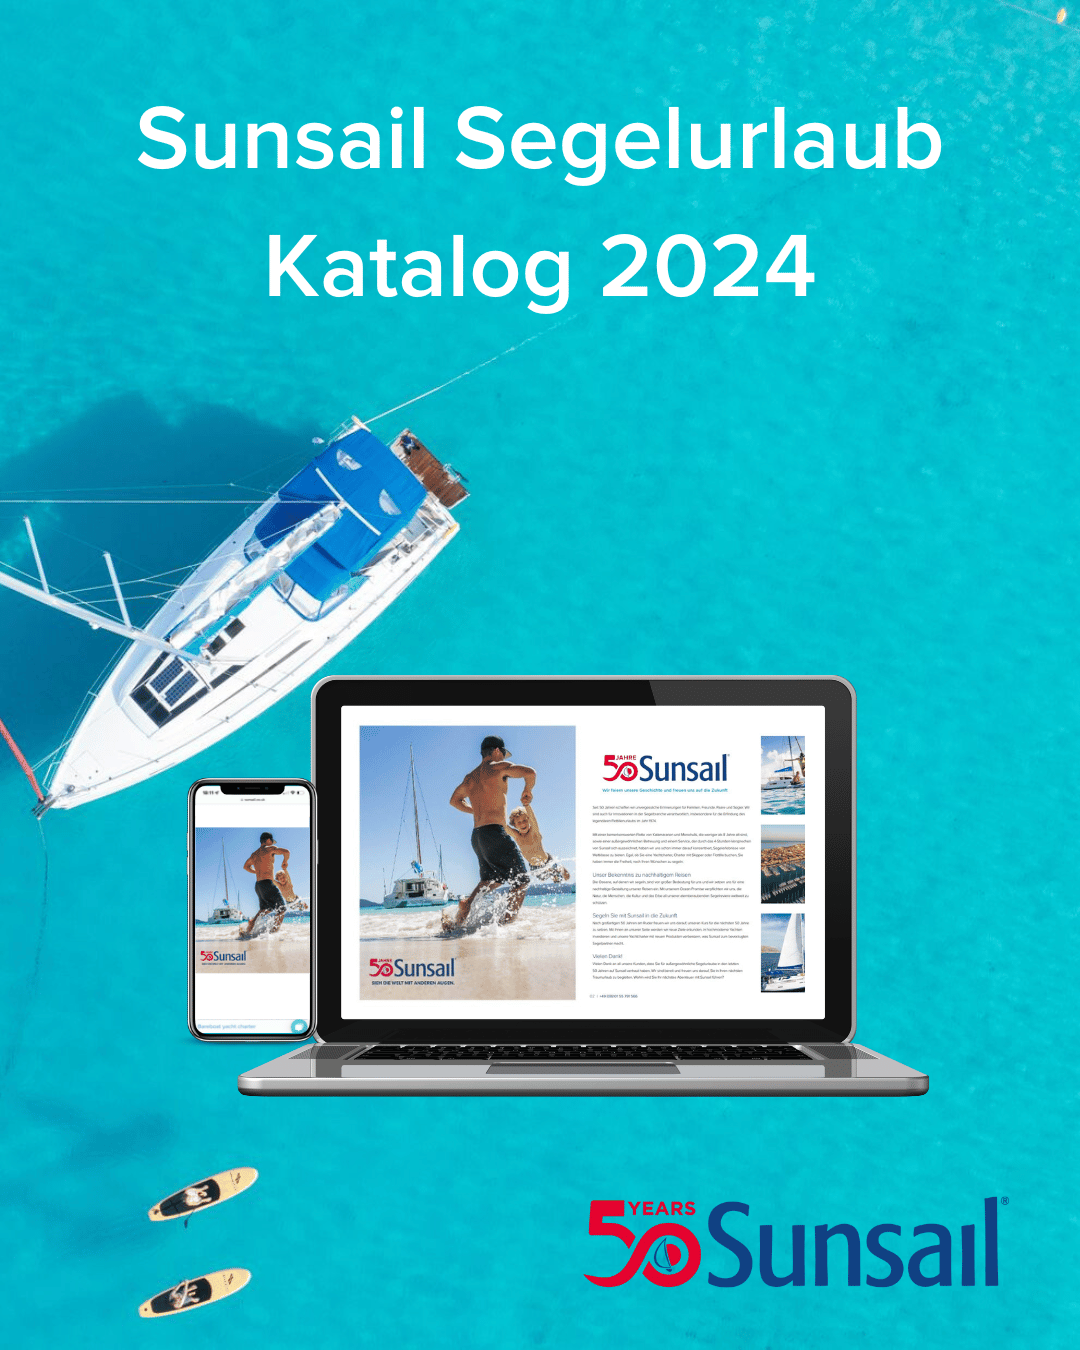 Sunsail Segelurlaub Katalog 2024